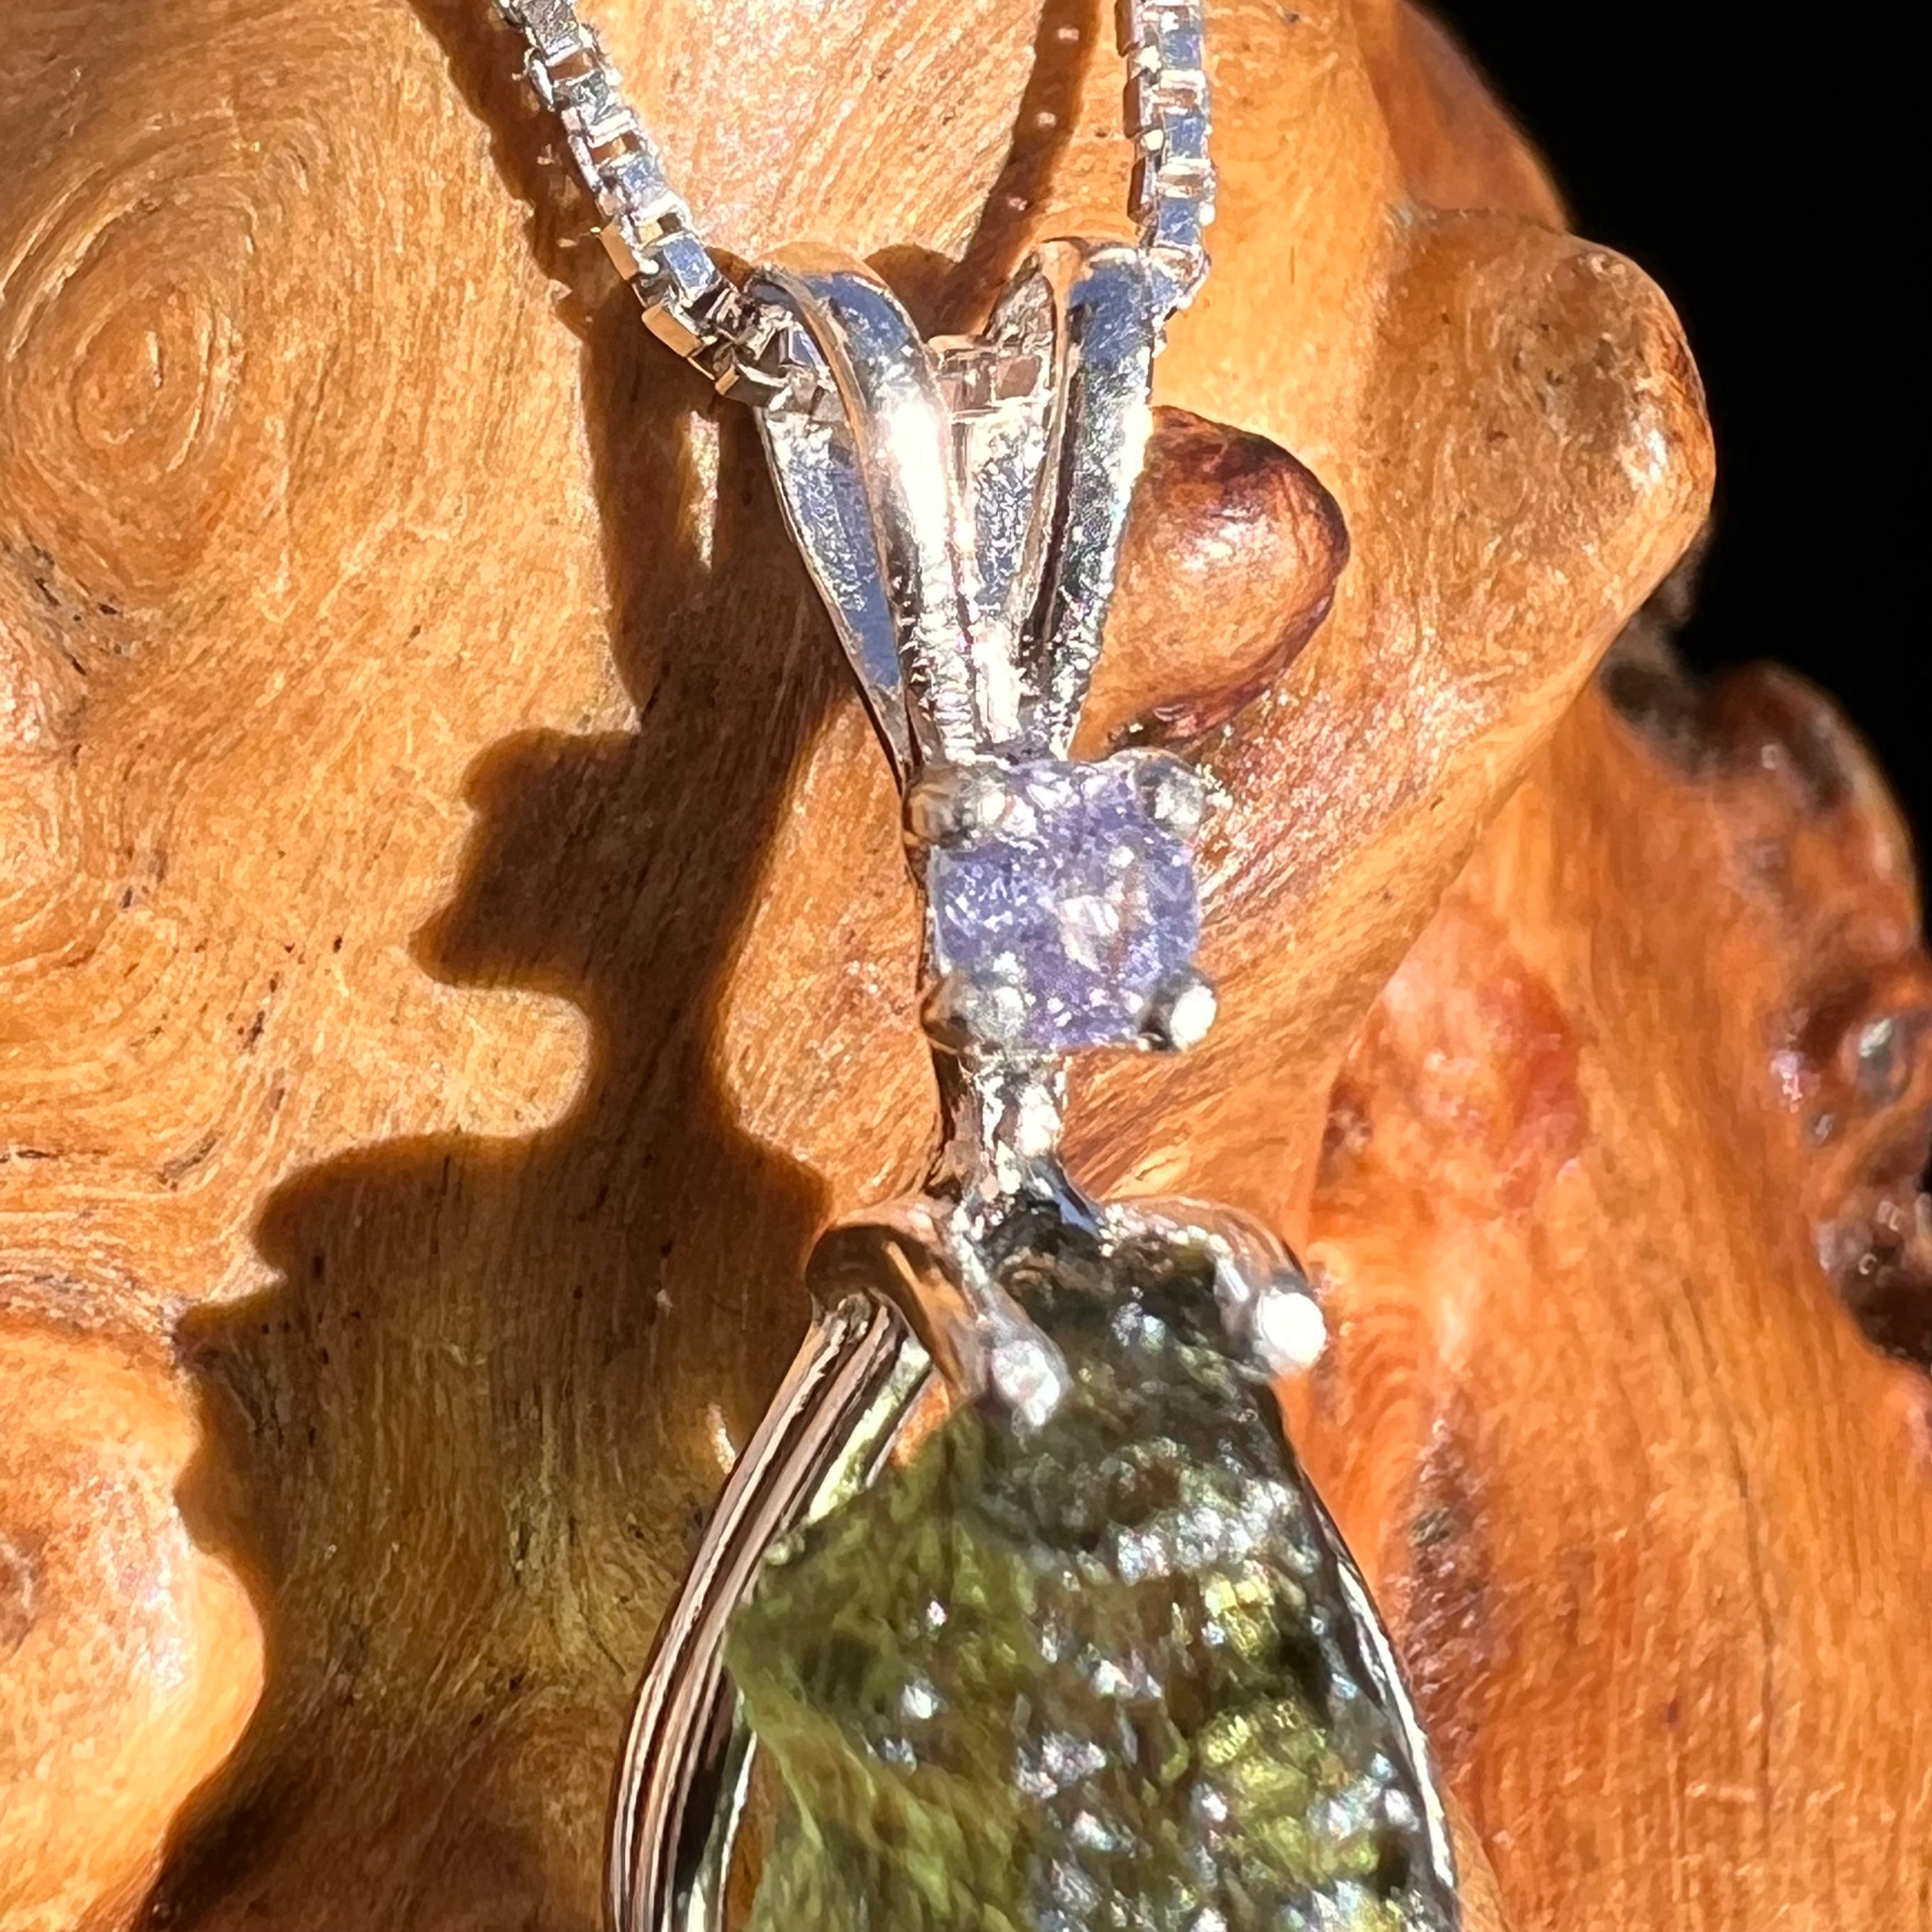 Moldavite - Browse Stunning Crystals at Happy Glastonbury!